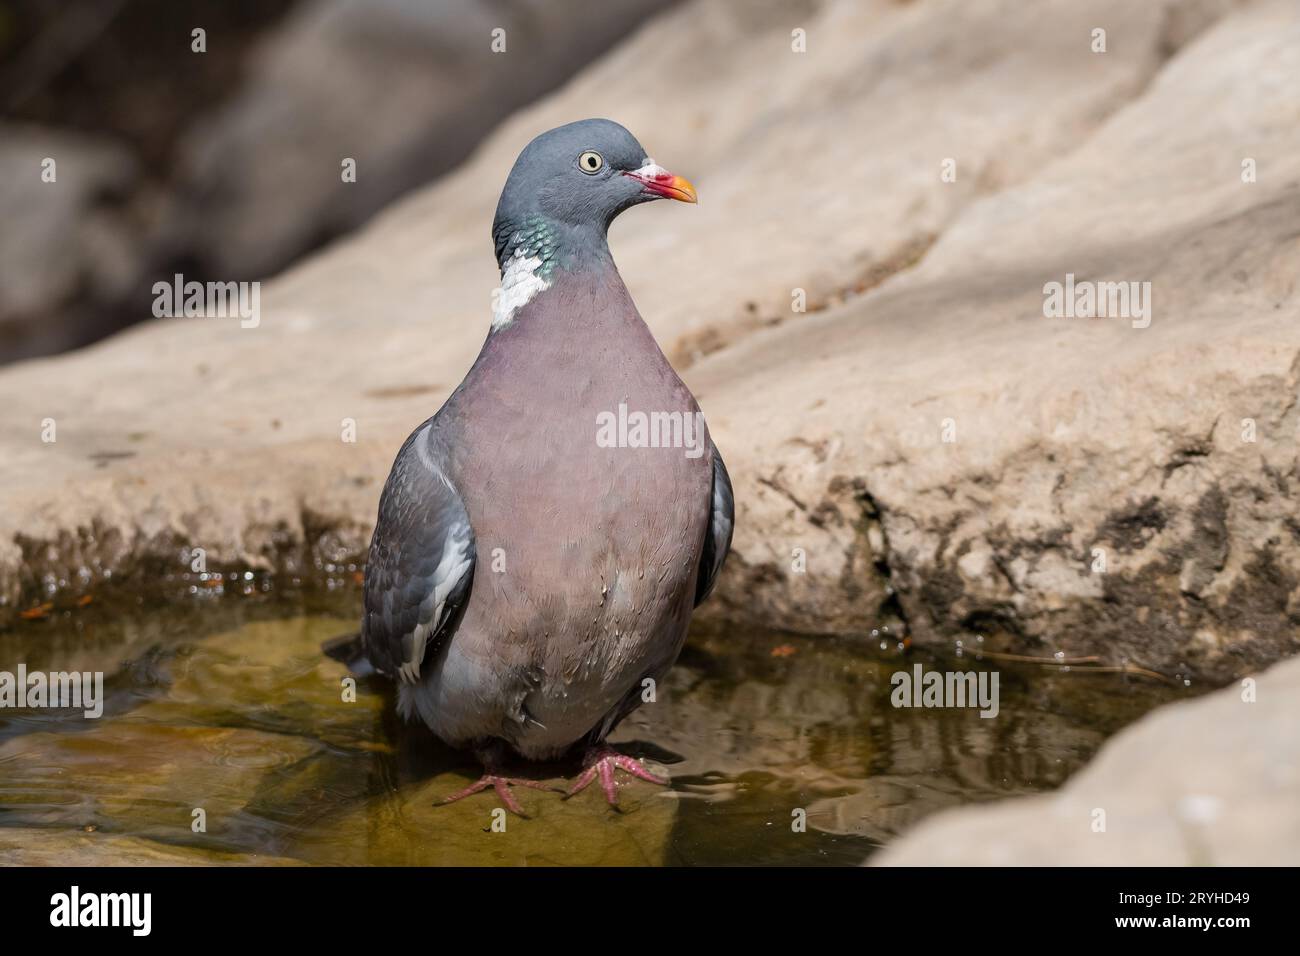 Columba palumbus, common wood pigeon having a bath, Lleida, Catalonia, Spain Stock Photo